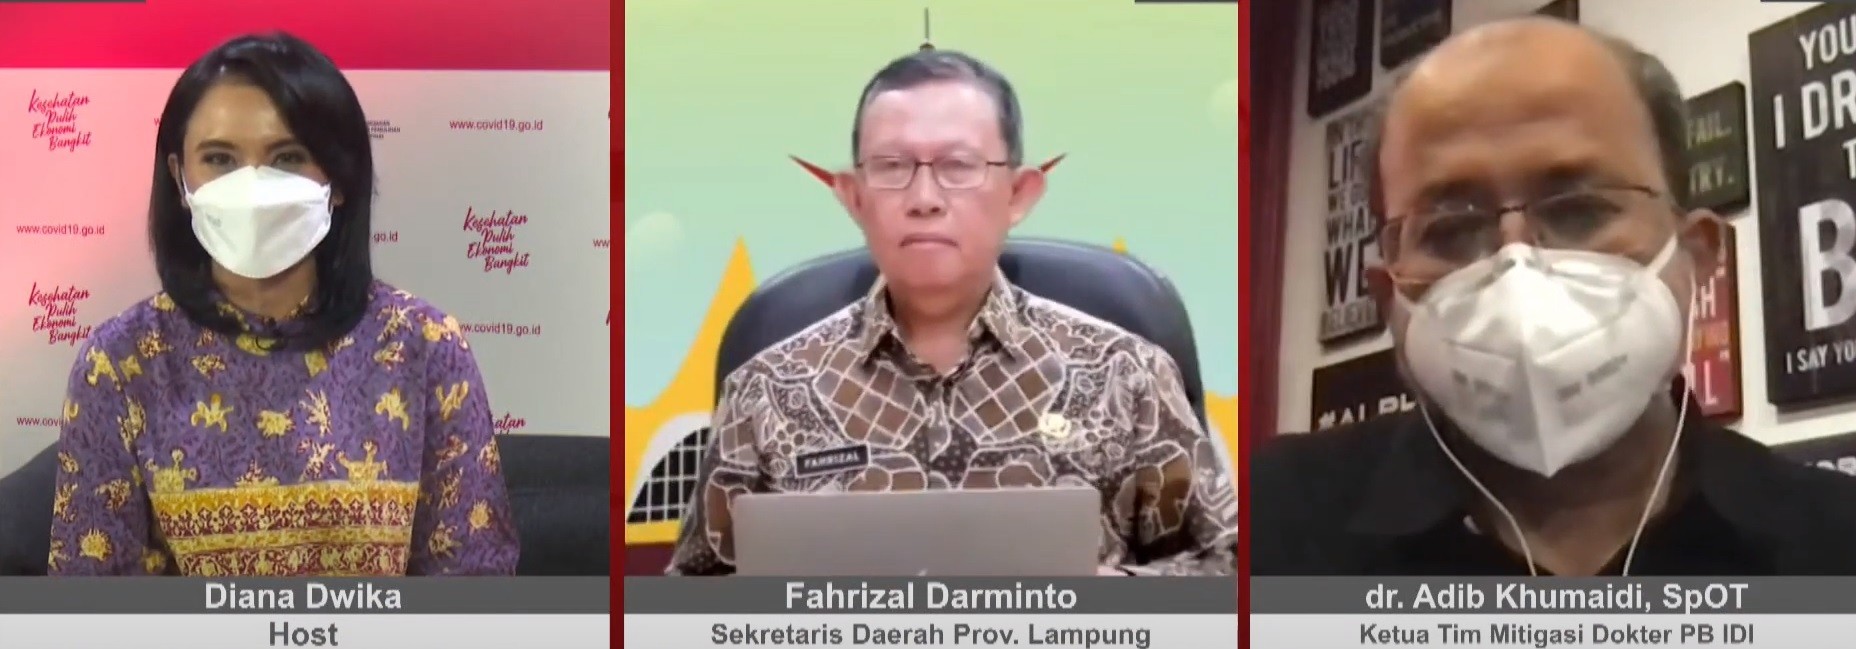 Fahrizal Darminto, Sekretaris Daerah Provinsi Lampung dan Wali Kota Padang, Hendri Septa saat dialog yang diadakan Komite Penanganan COVID-19 dan Pemulihan Ekonomi Nasional, 13 Juli 2021 kemarin. (Foto: Istimewa)